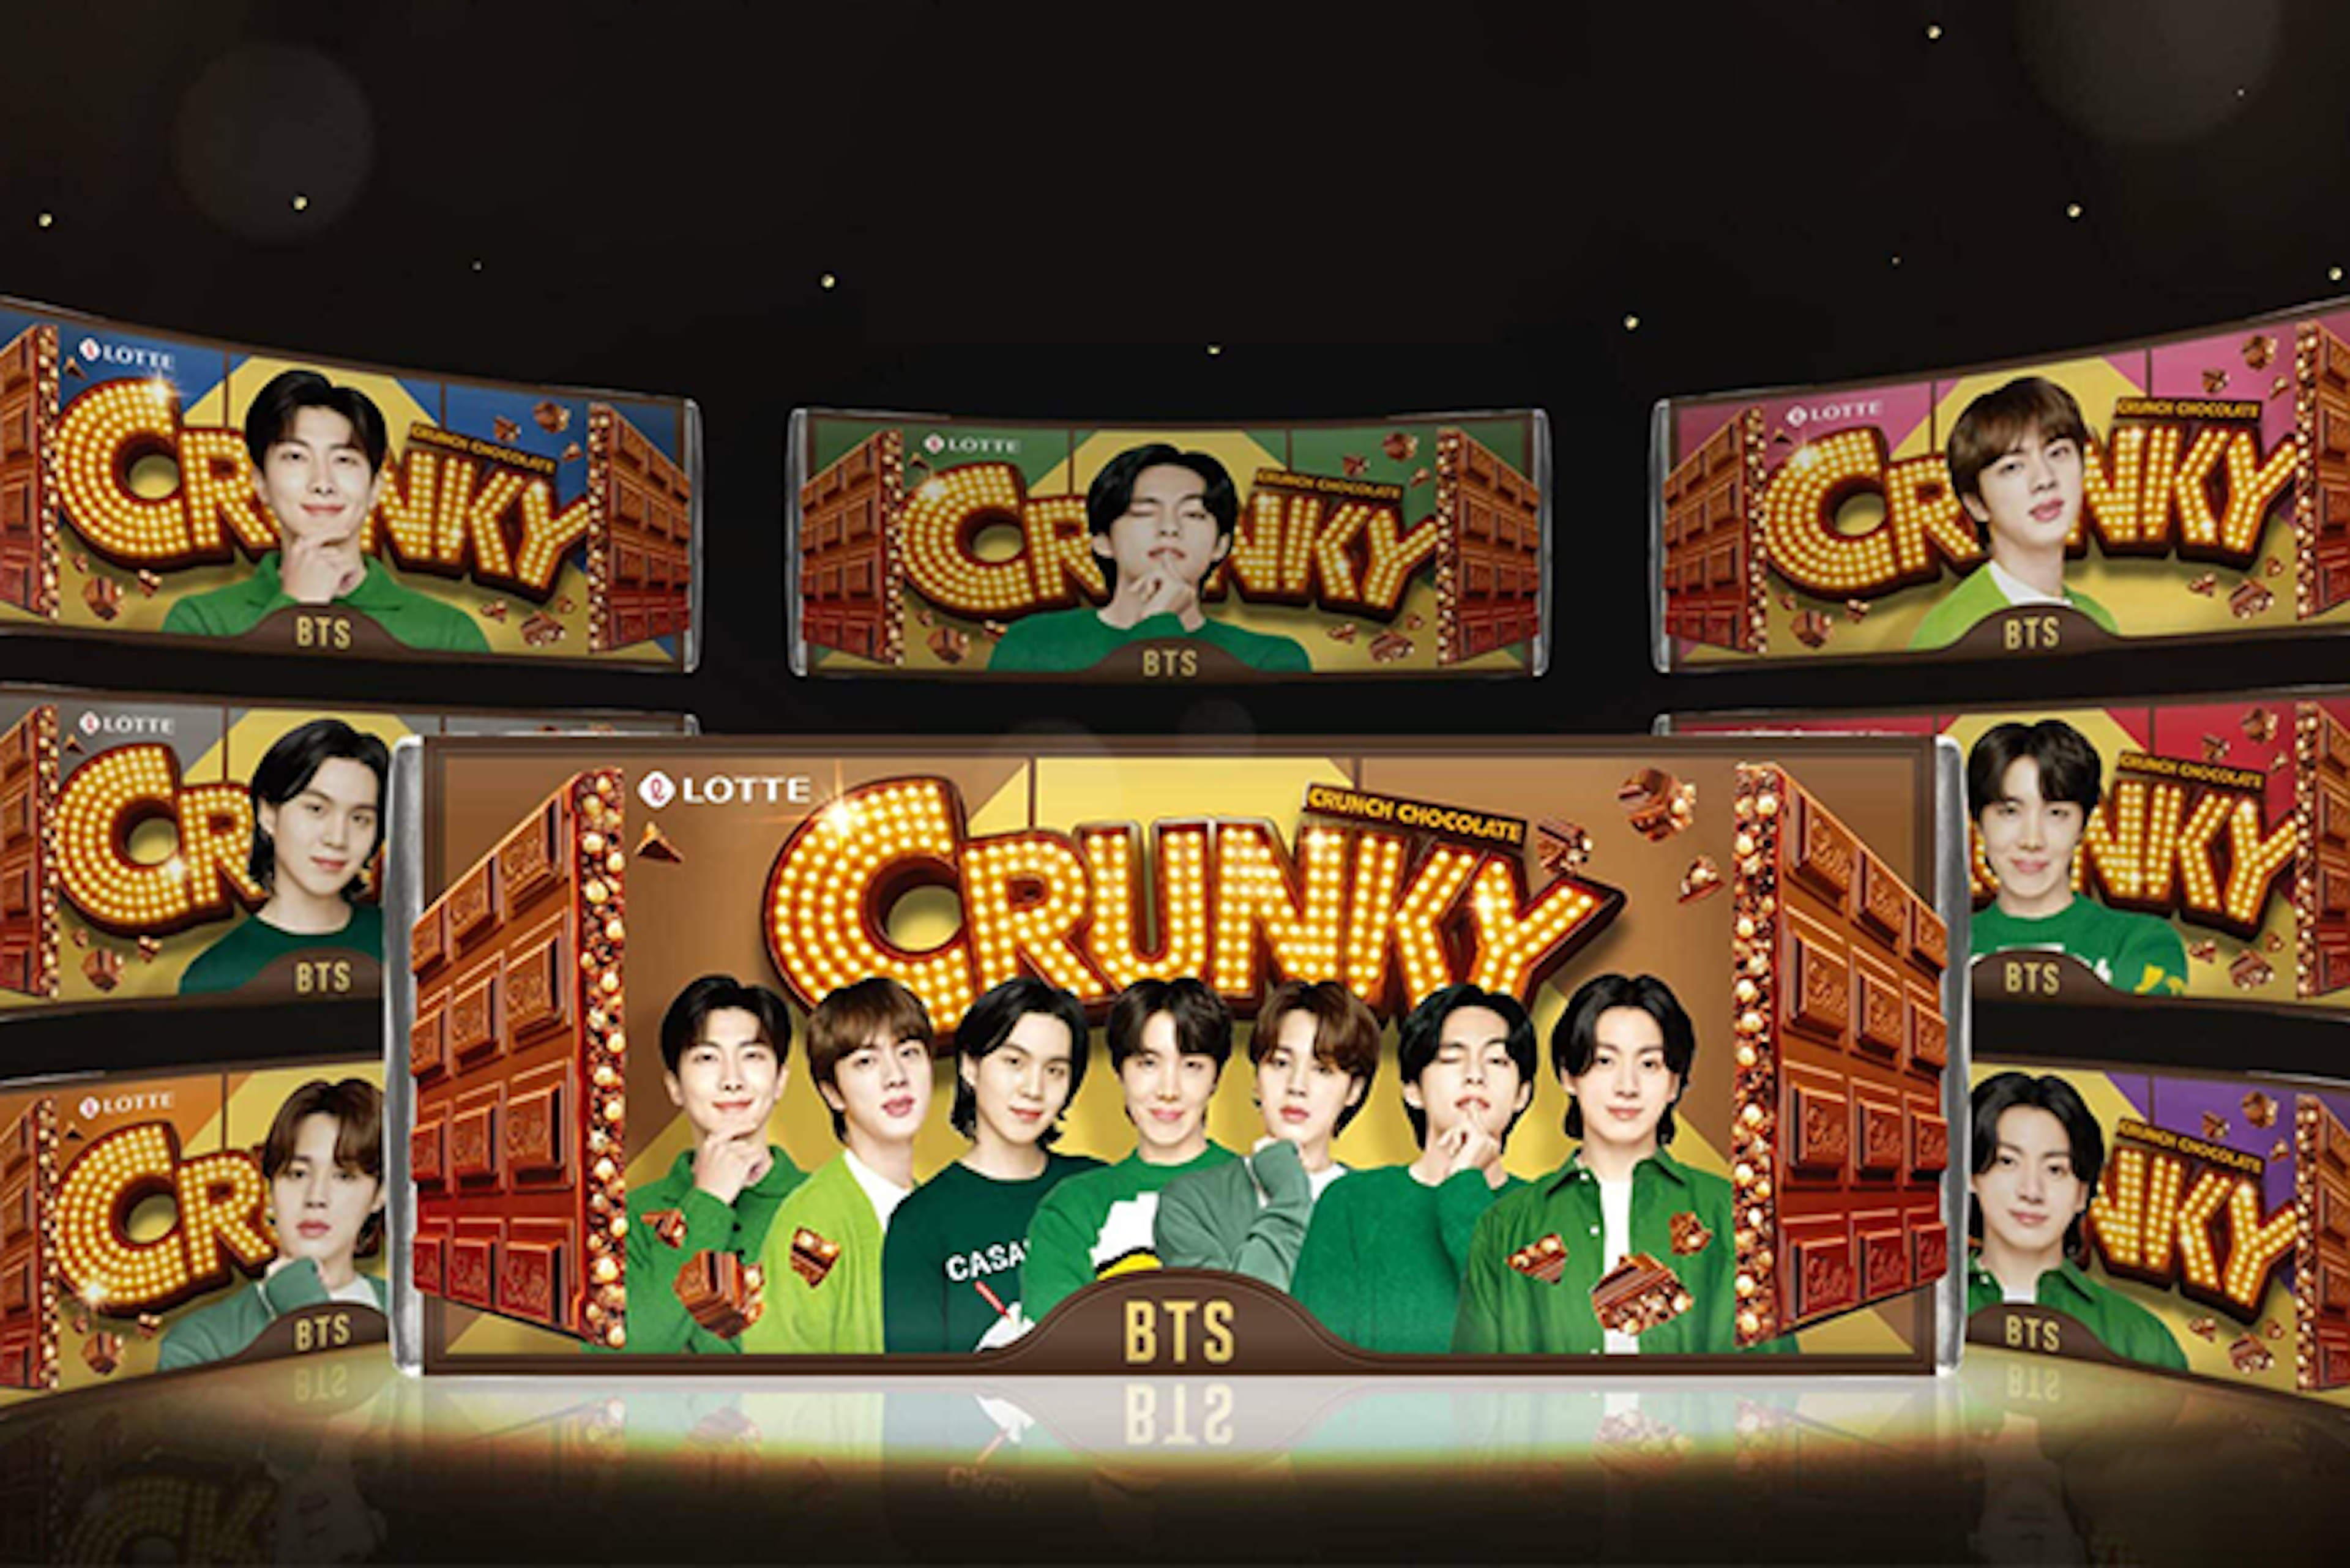 LOTTE-Crunky-Crunch-Chocolate-BTS-Limited-Edition-Packung-vorne-gezeigt